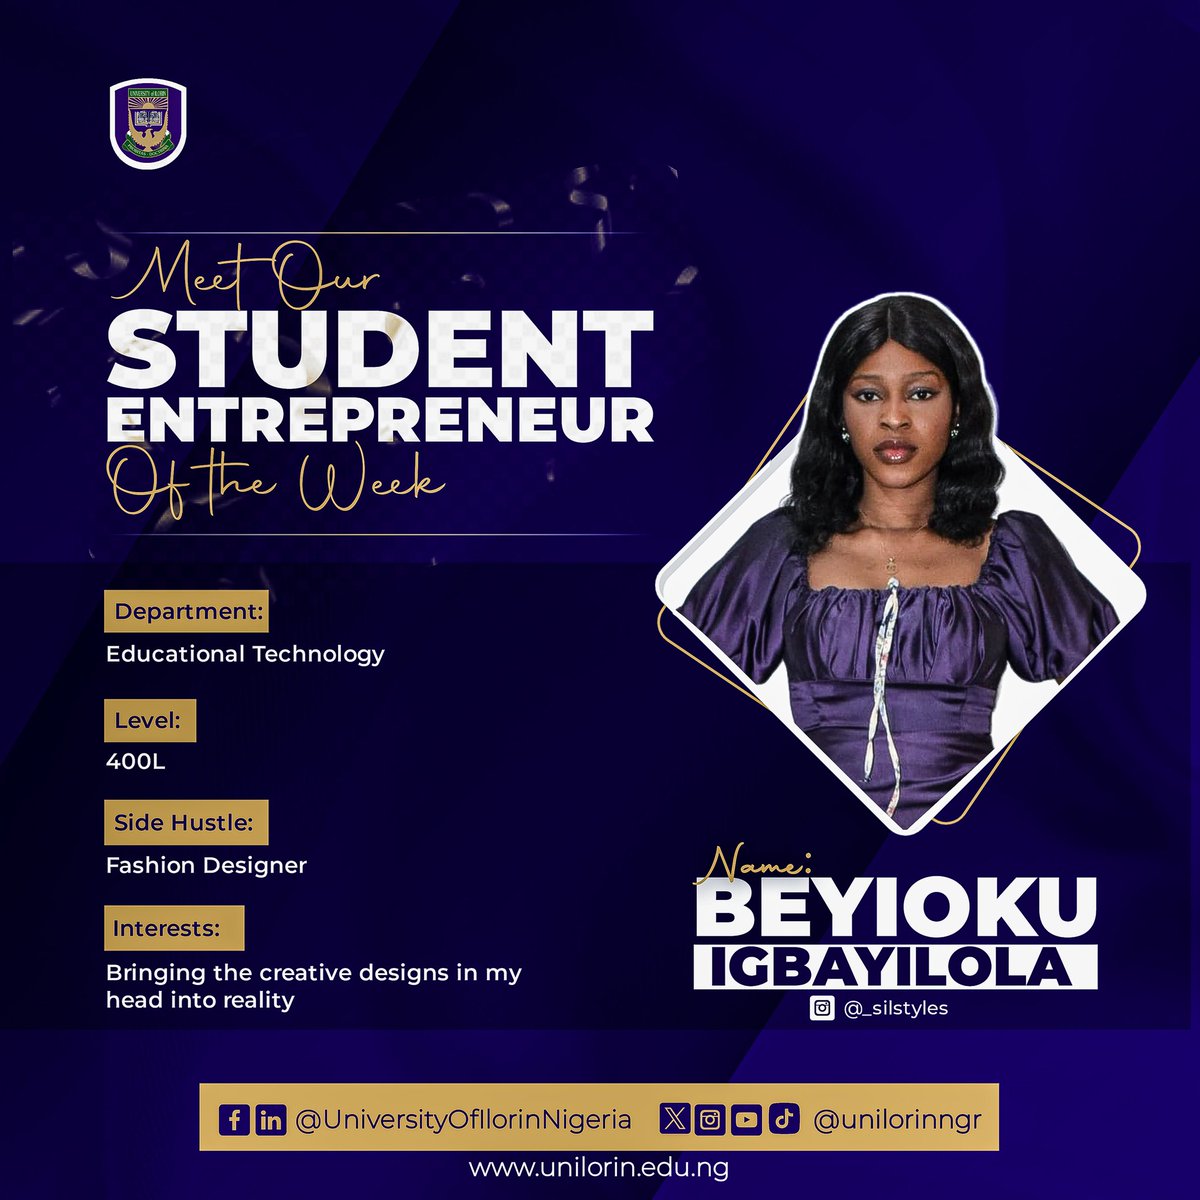 Meet Our Student Entrepreneur of the Week

Beyioku Igbayilola (_silstyles on Instagram)

Graphics: UNILORIN Social Media Volunteer/@hibee_concepts

#BetterByFar
#UNILORINEntrepreneur
@UilStudentUnion